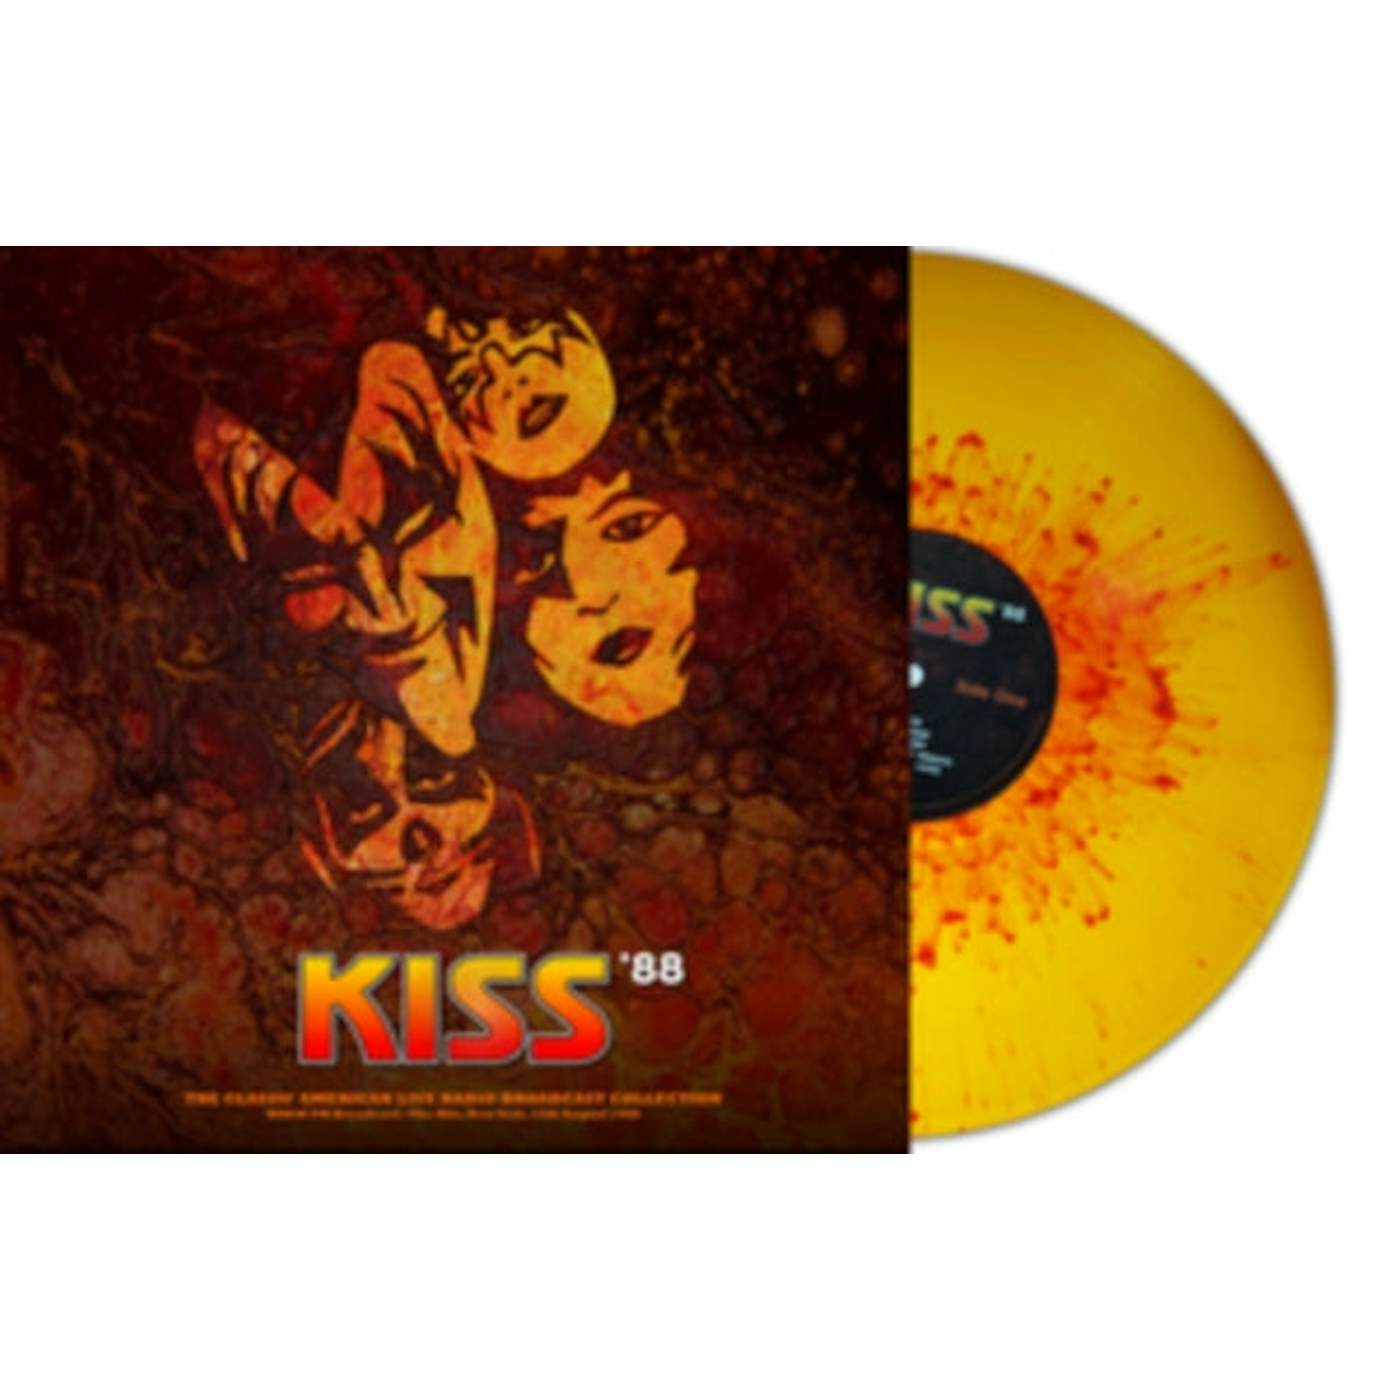 Kiss LP Vinyl Record - Live At The Ritz. New York 19 88 (Orange/Red Splatter Vinyl)